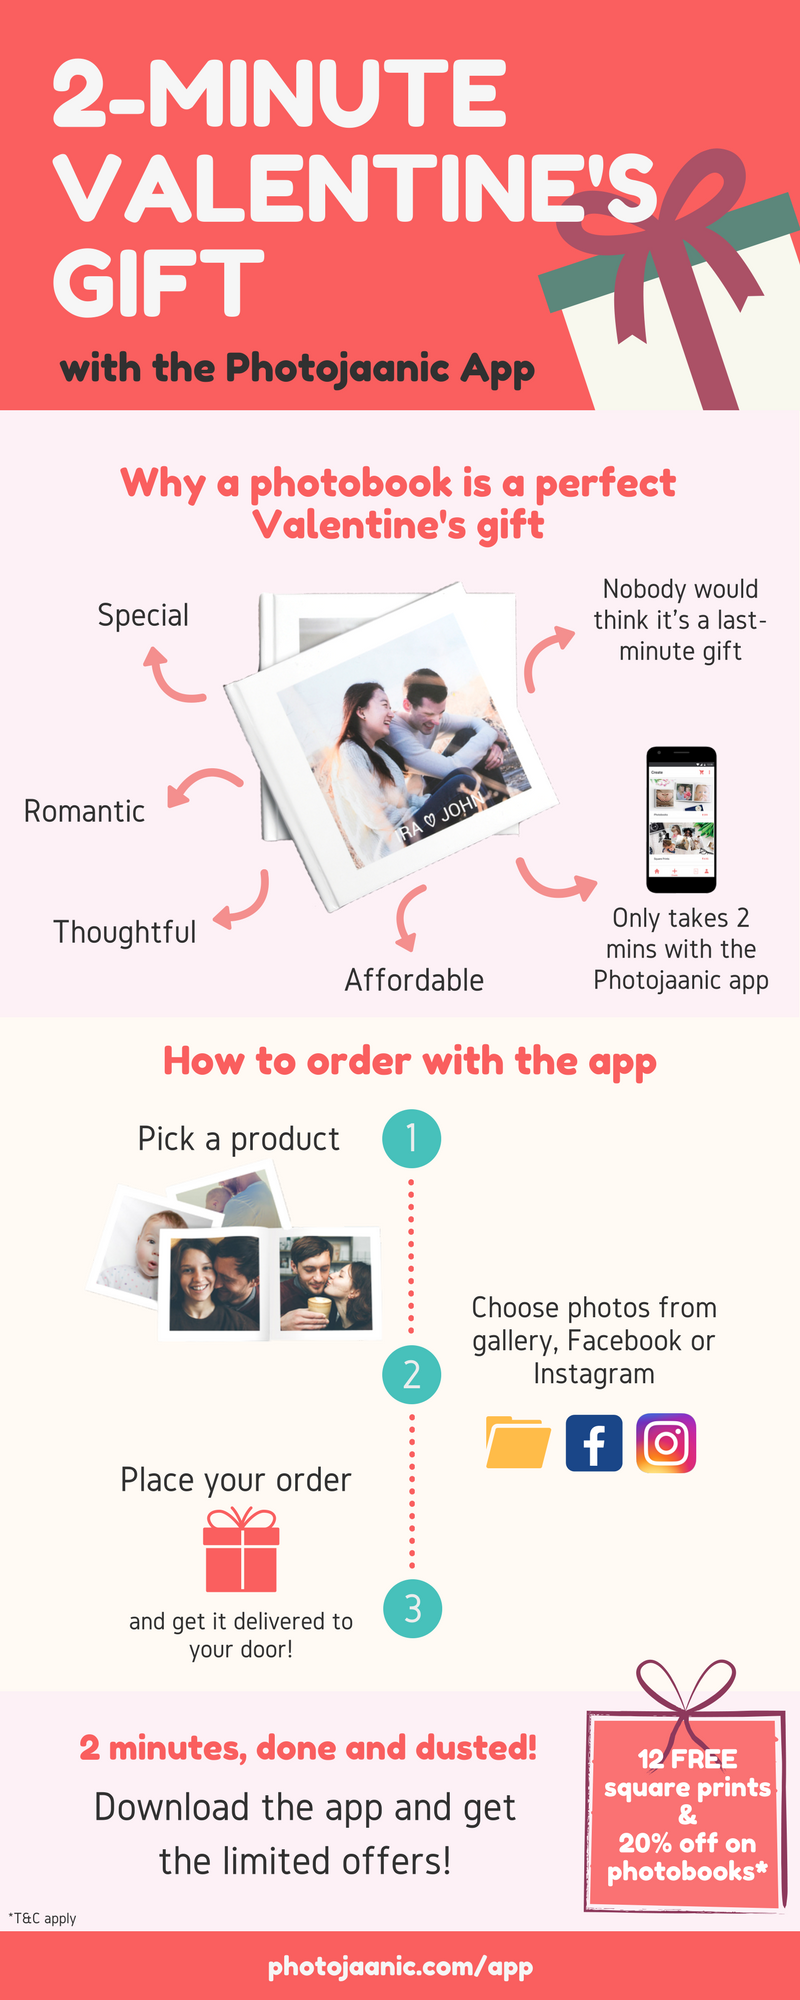 photo printing apps to print photos from phone - Photojaanic app